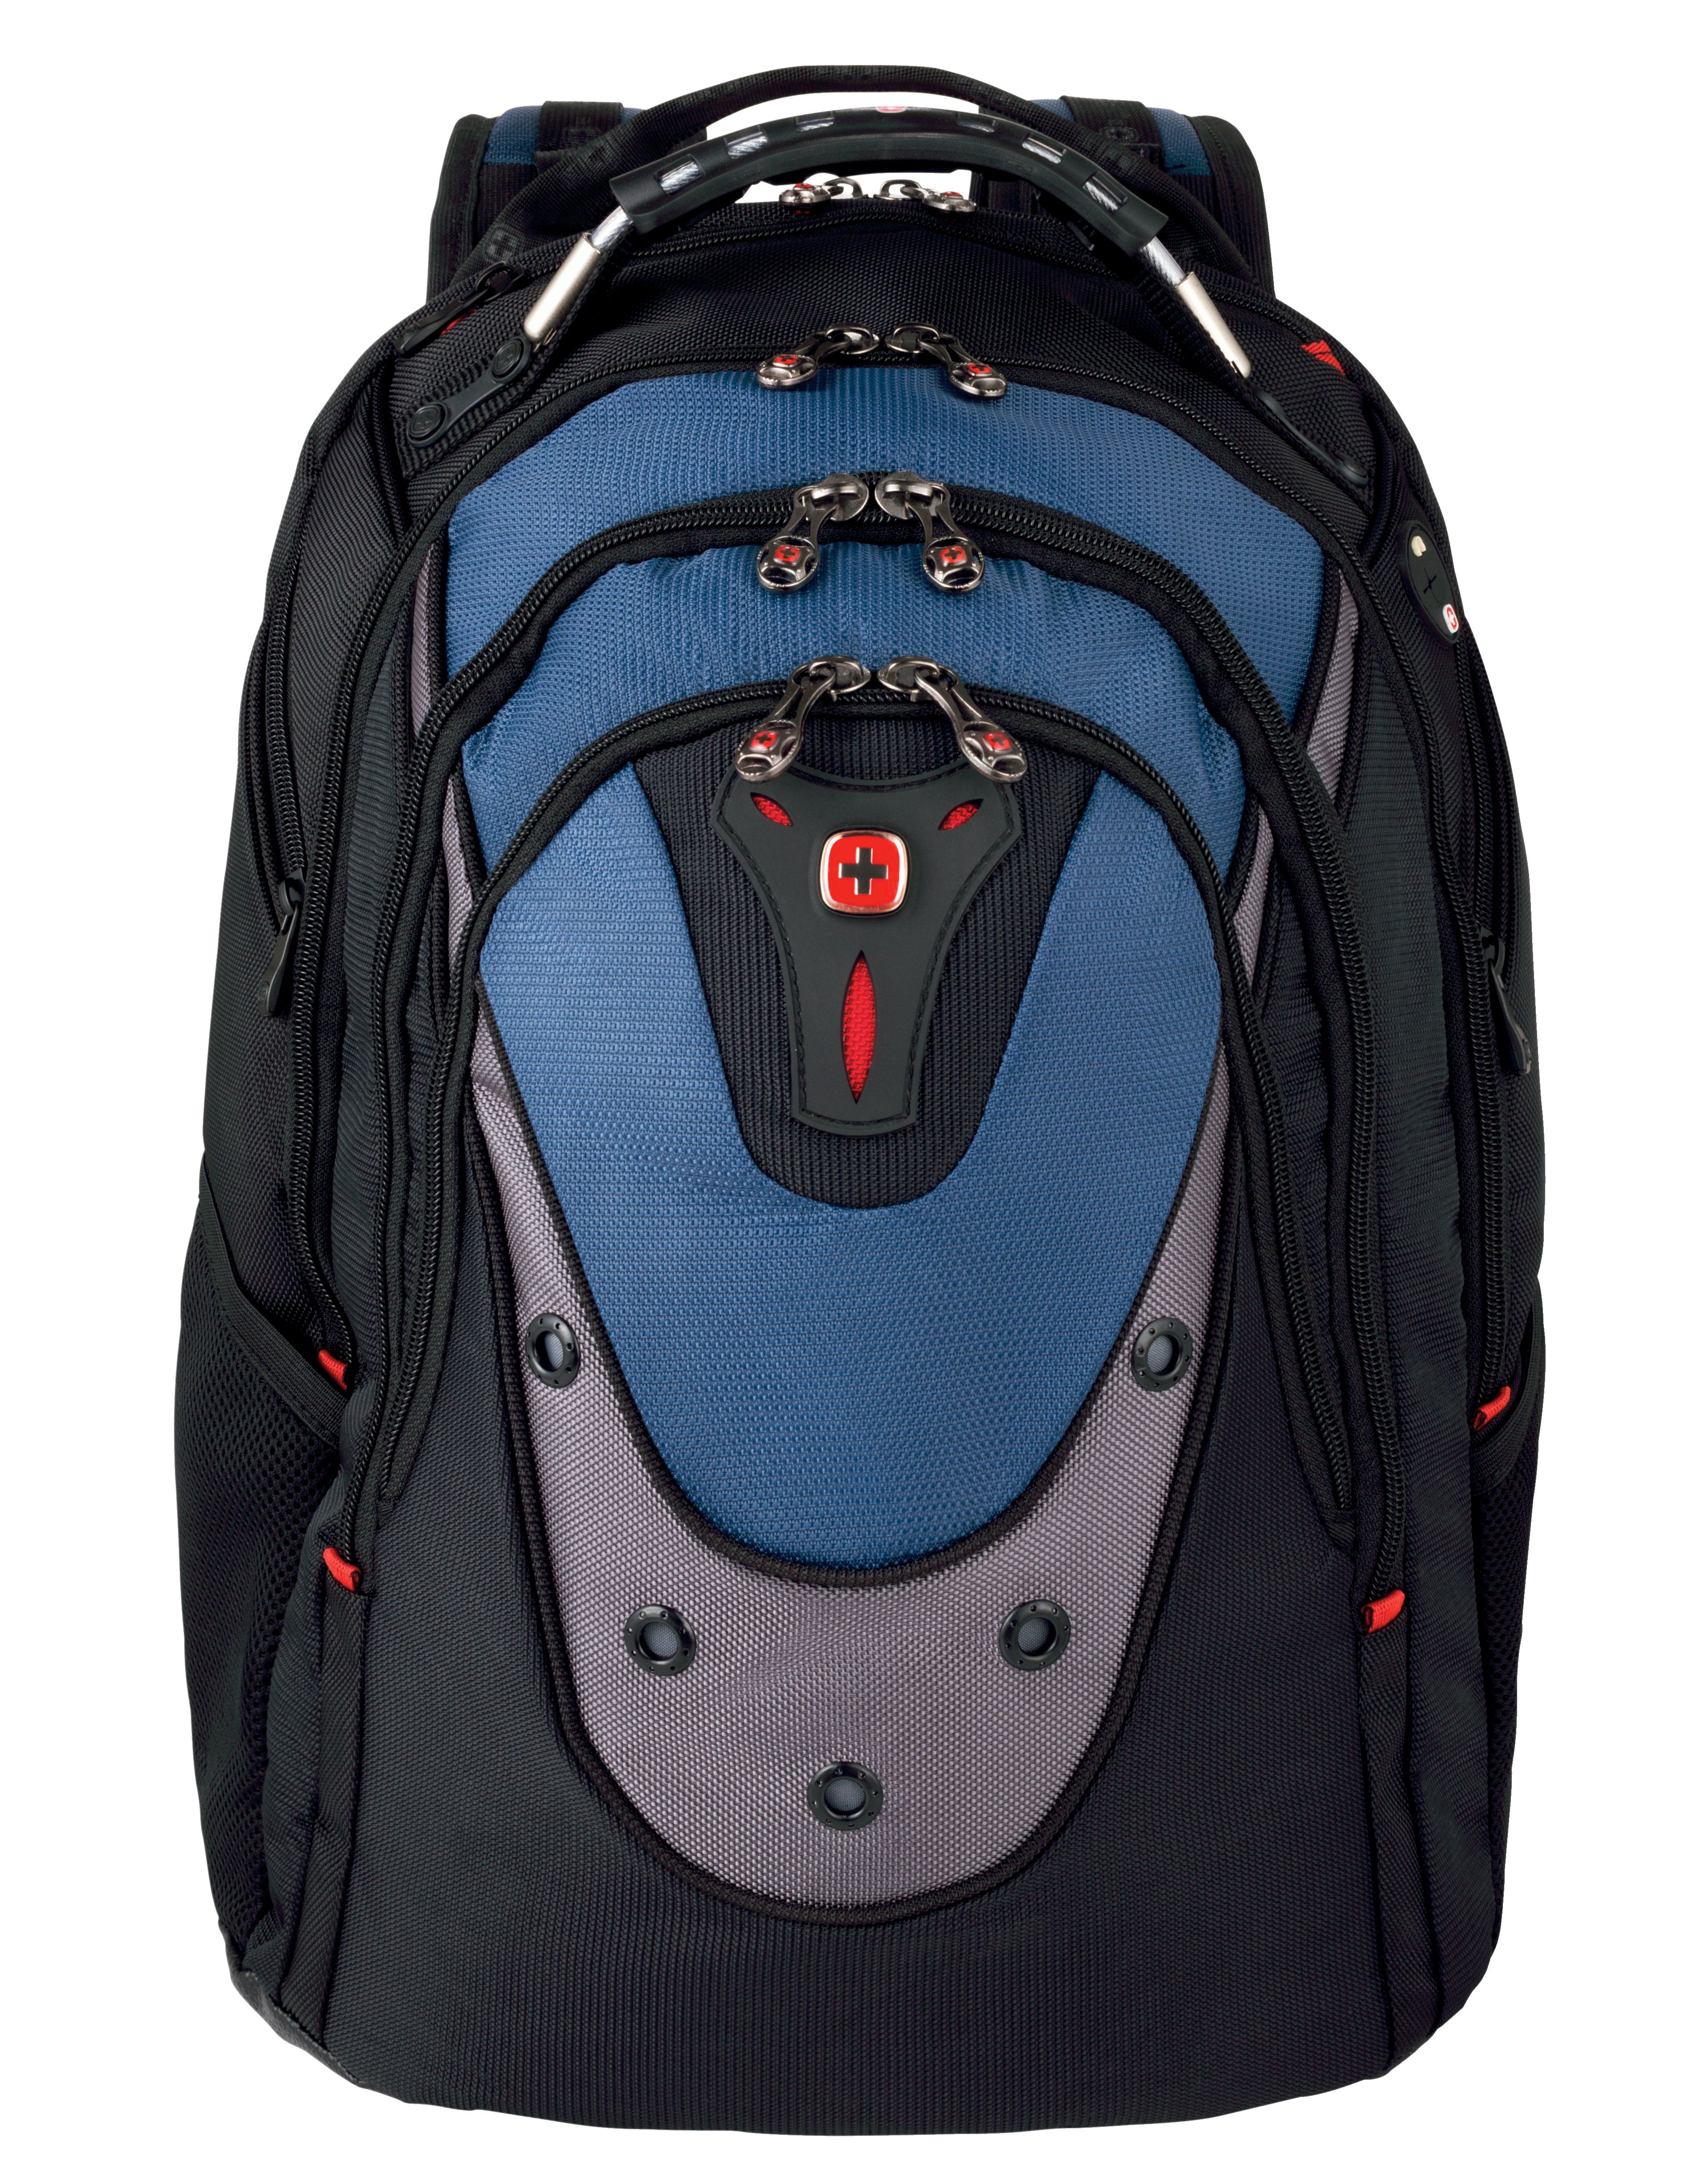 Swissgear Ibex 17 Backpack - Black/Blue